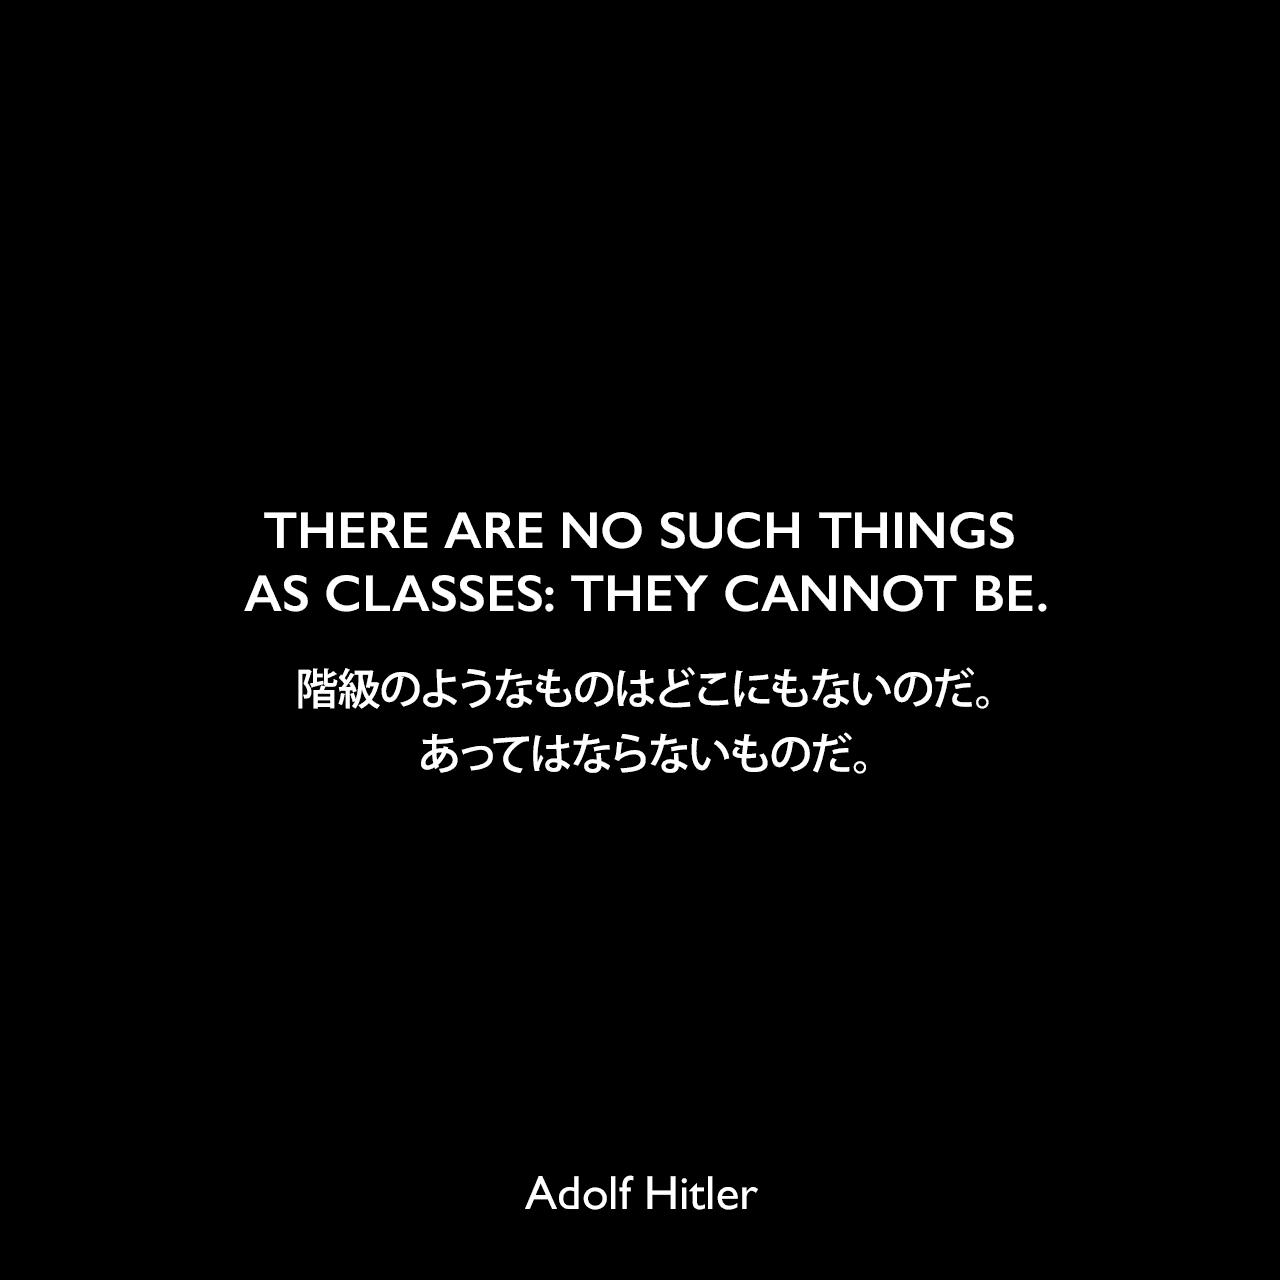 THERE ARE NO SUCH THINGS AS CLASSES: THEY CANNOT BE.階級のようなものはどこにもないのだ。あってはならないものだ。- 1922年4月12日ミュンヘンでのスピーチよりAdolf Hitler